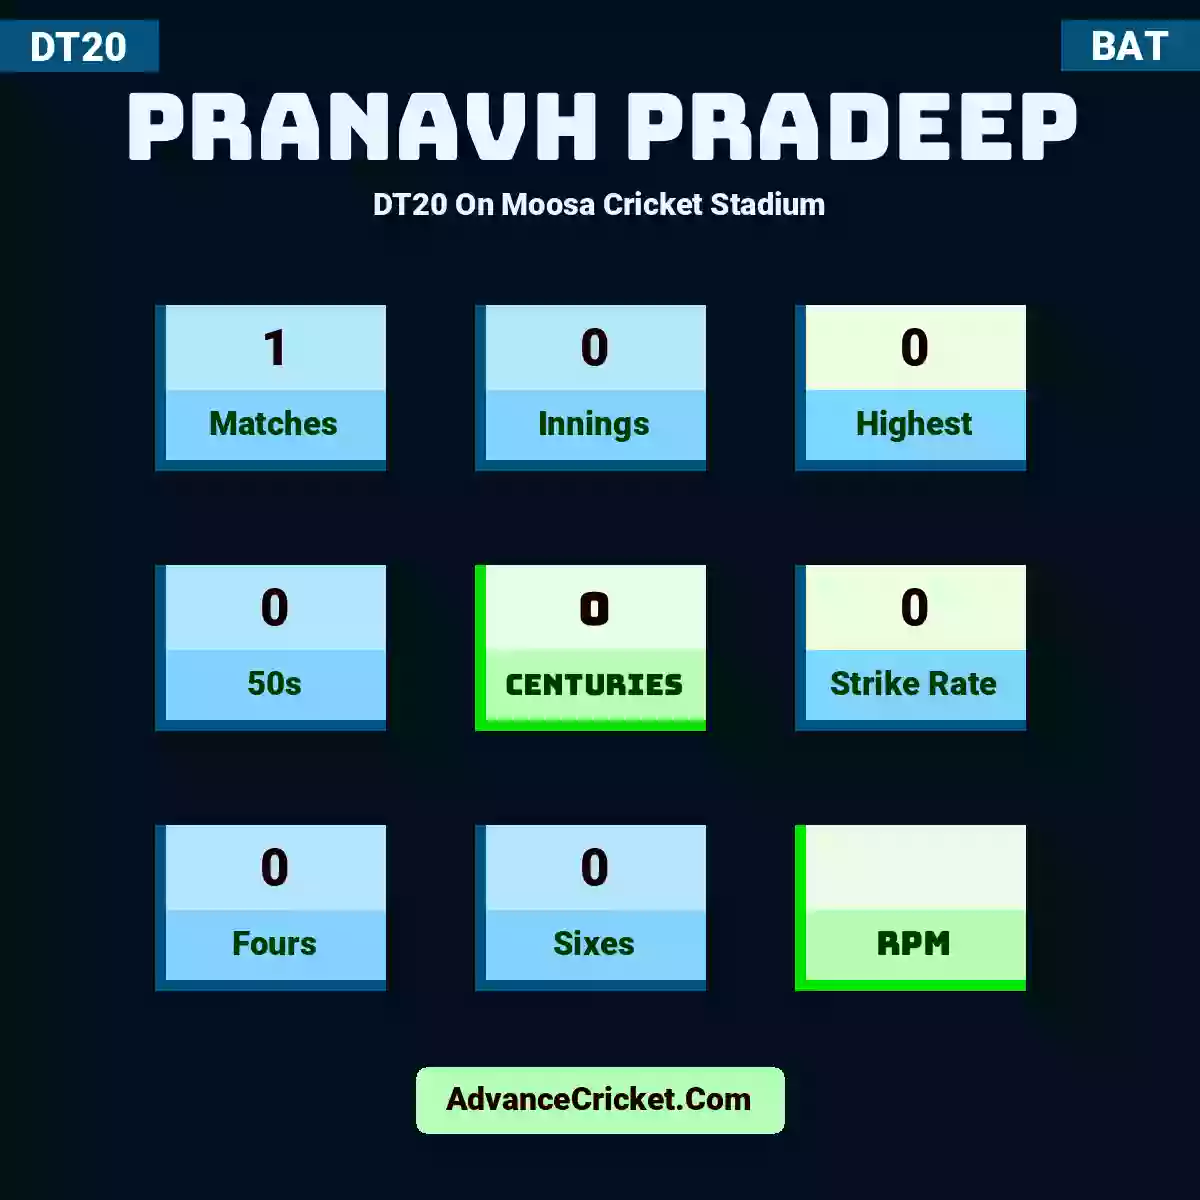 Pranavh Pradeep DT20  On Moosa Cricket Stadium, Pranavh Pradeep played 1 matches, scored 0 runs as highest, 0 half-centuries, and 0 centuries, with a strike rate of 0. P.Pradeep hit 0 fours and 0 sixes.